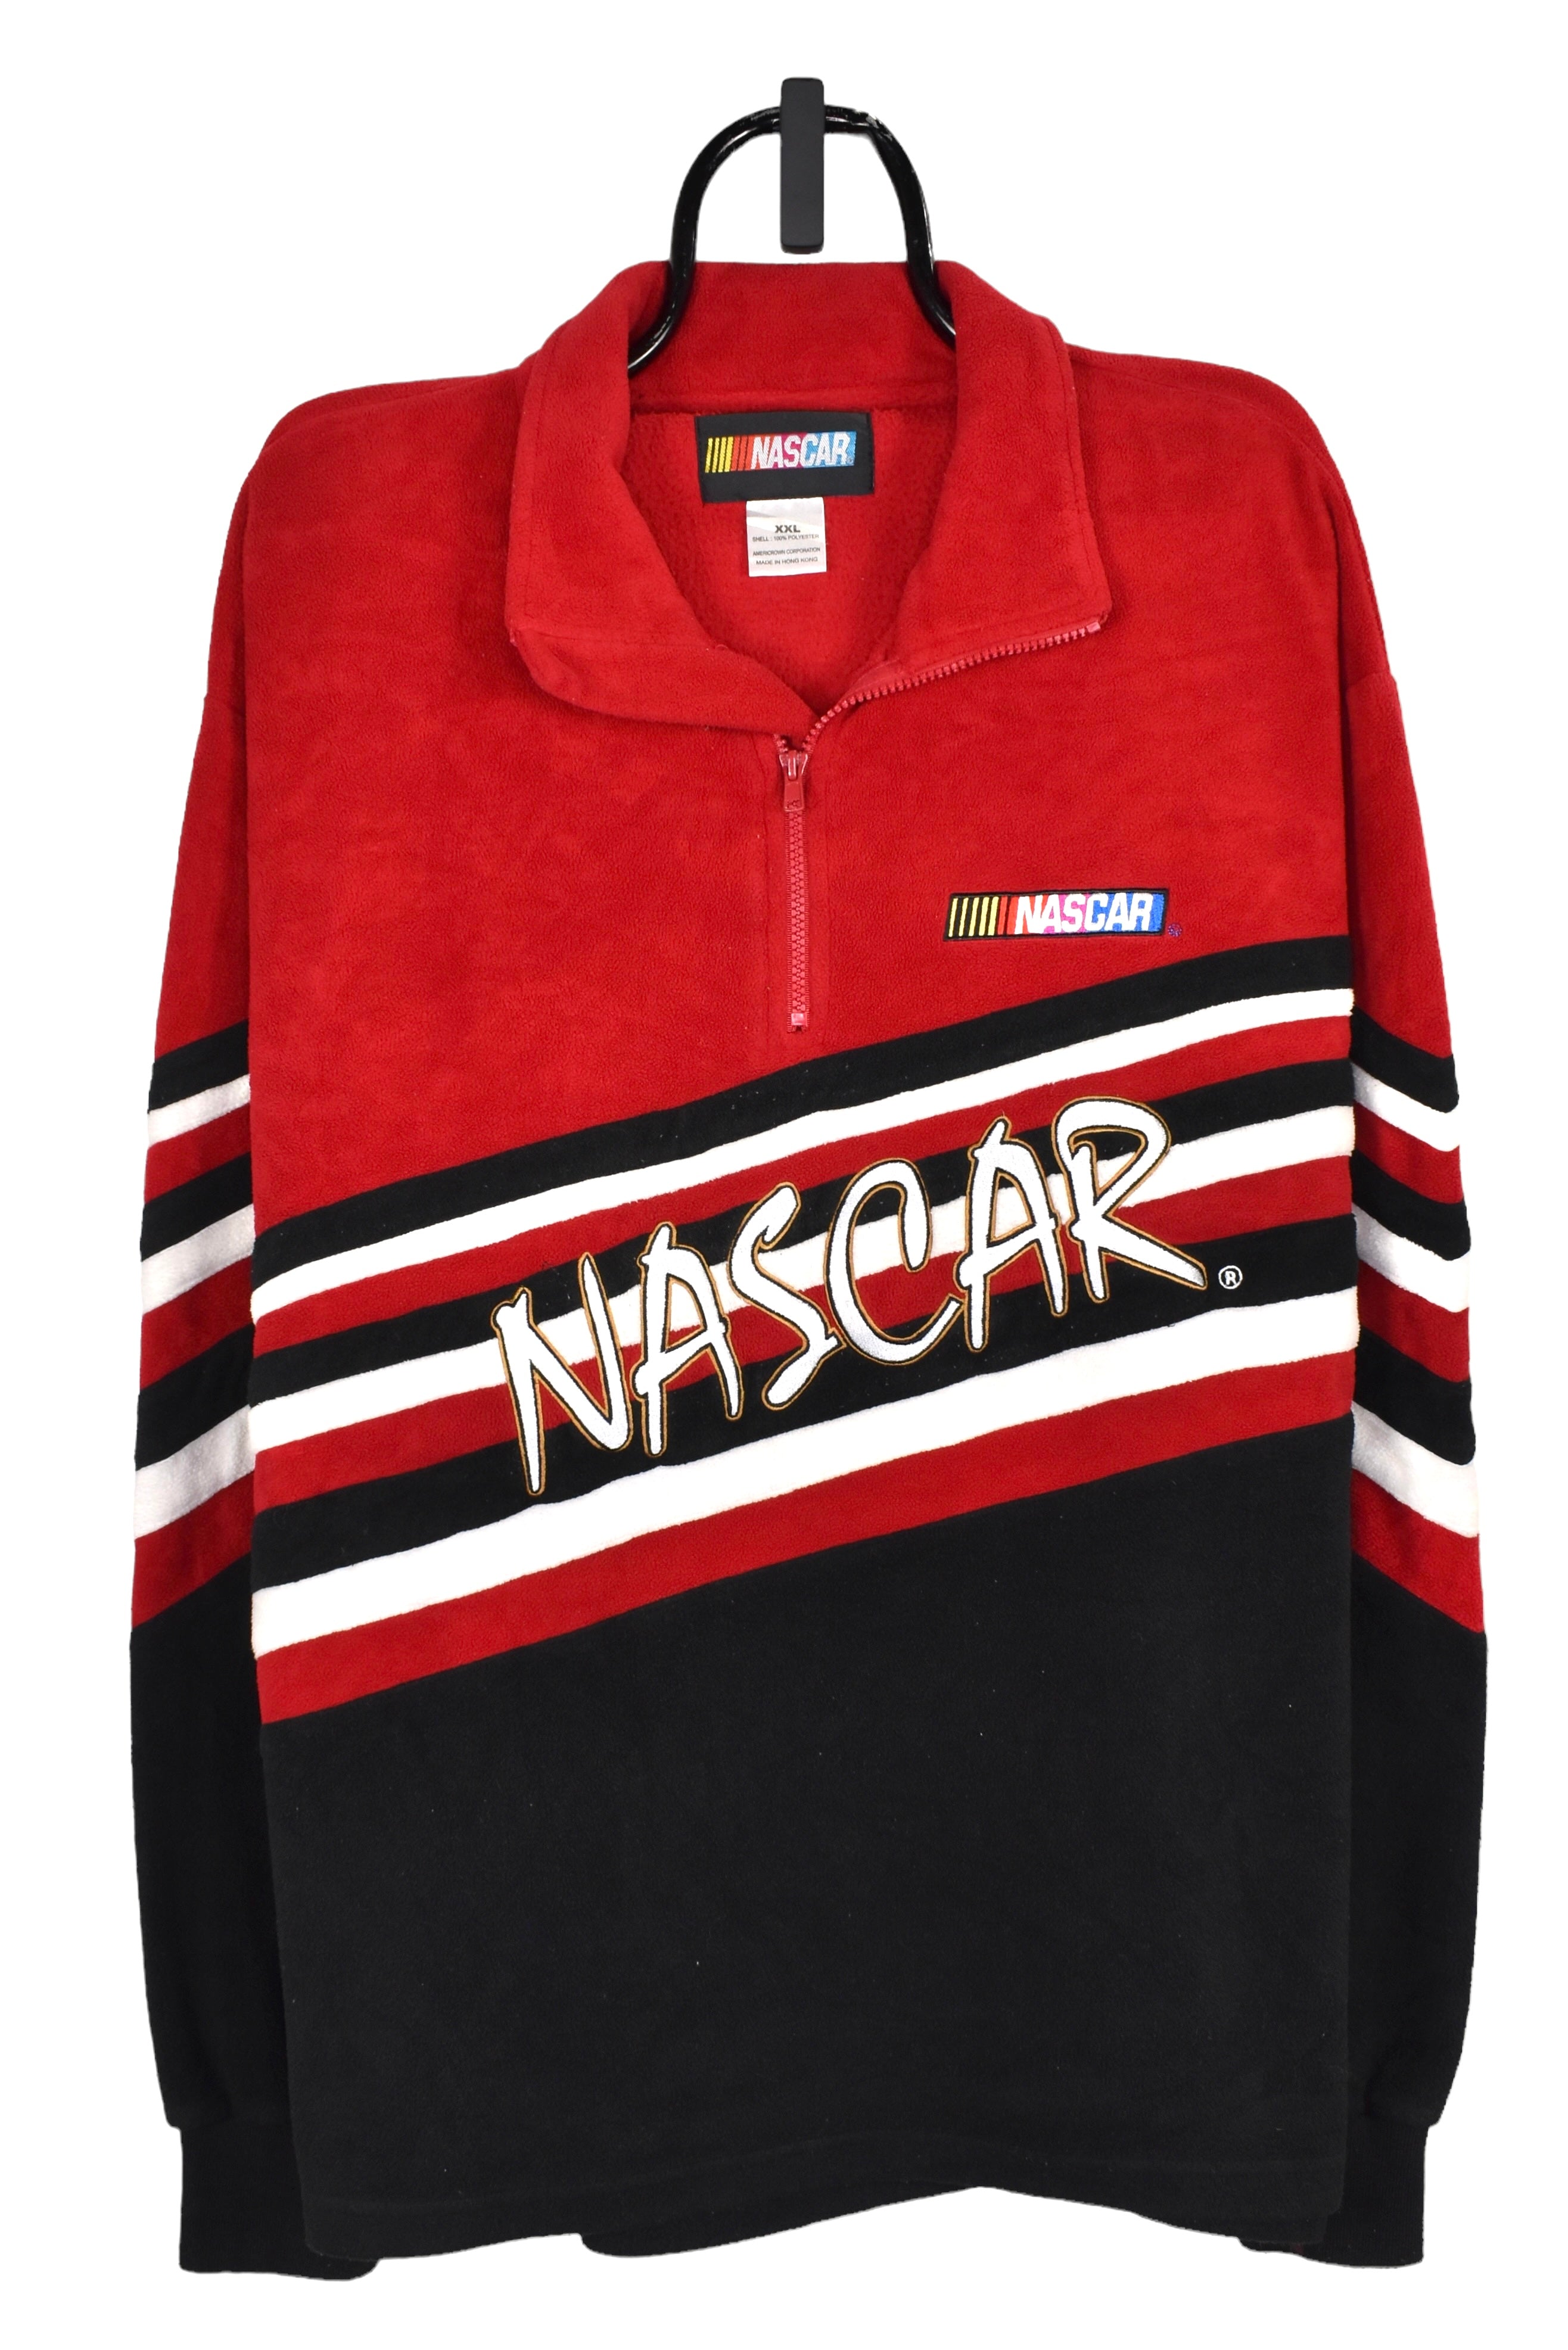 Vintage NASCAR fleece (XL), red embroidered quarter zip sweatshirt